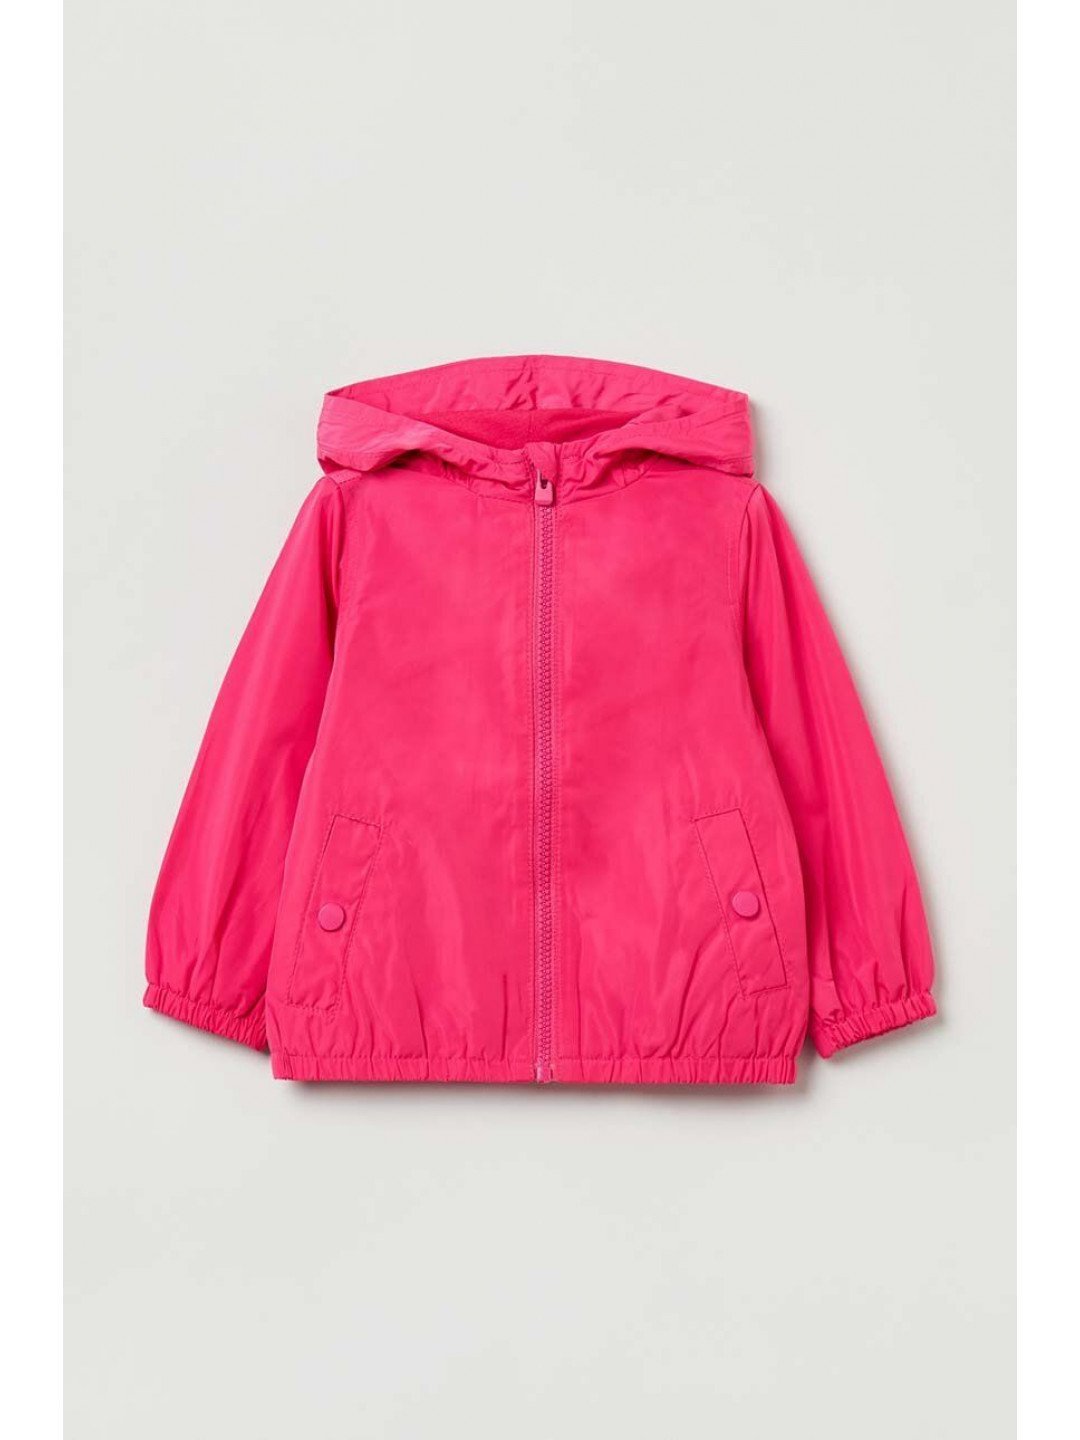 Kojenecká bunda OVS růžová barva